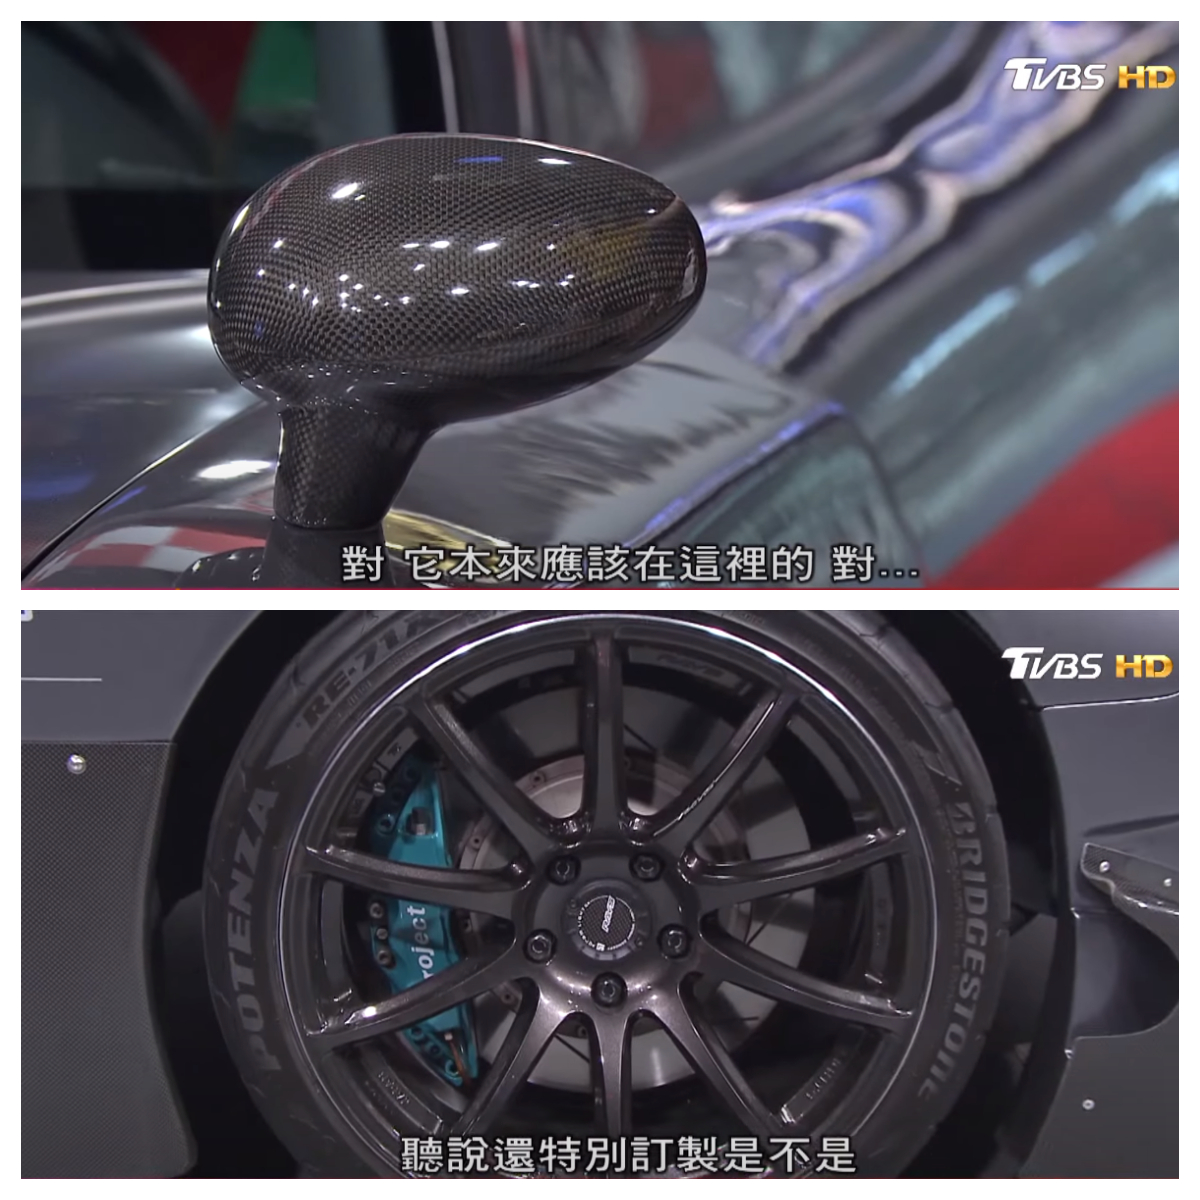 RE雨宮套件特有的葉子板後視鏡，以及車主向Project Mu訂製的煞車卡鉗。(圖片來源/ 地球黃金線)